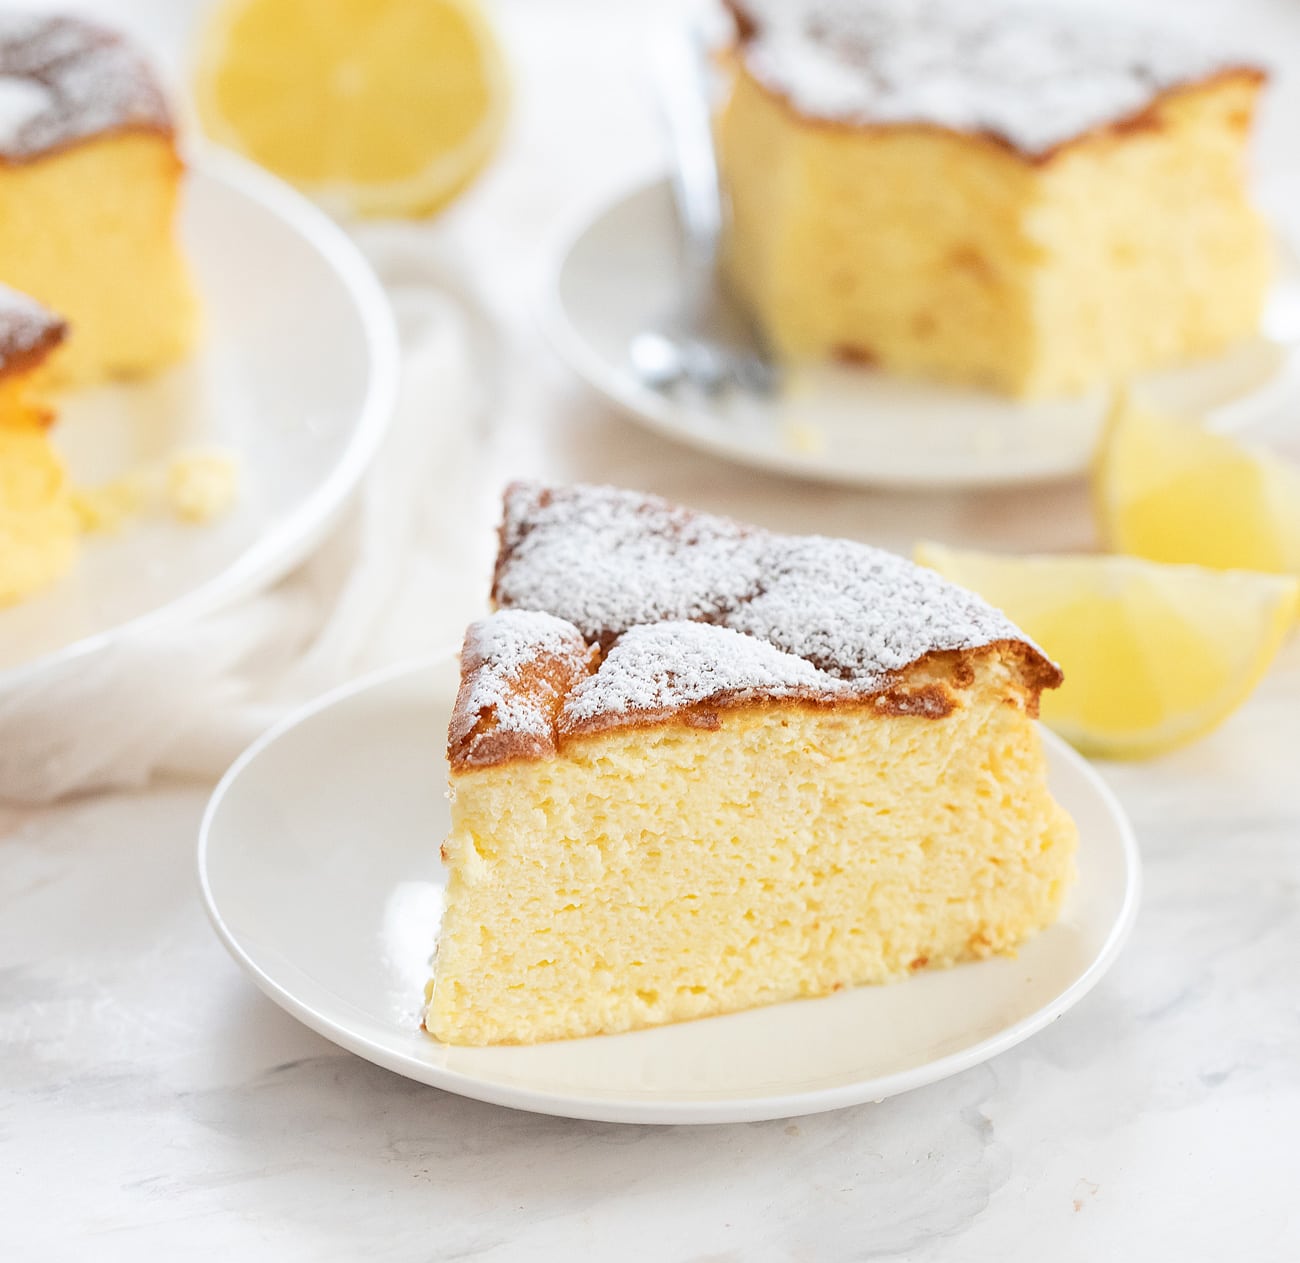 230 Calorie Entire Lemon Cake | healthy lemon cake recipe | weight loss  recipes - YouTube